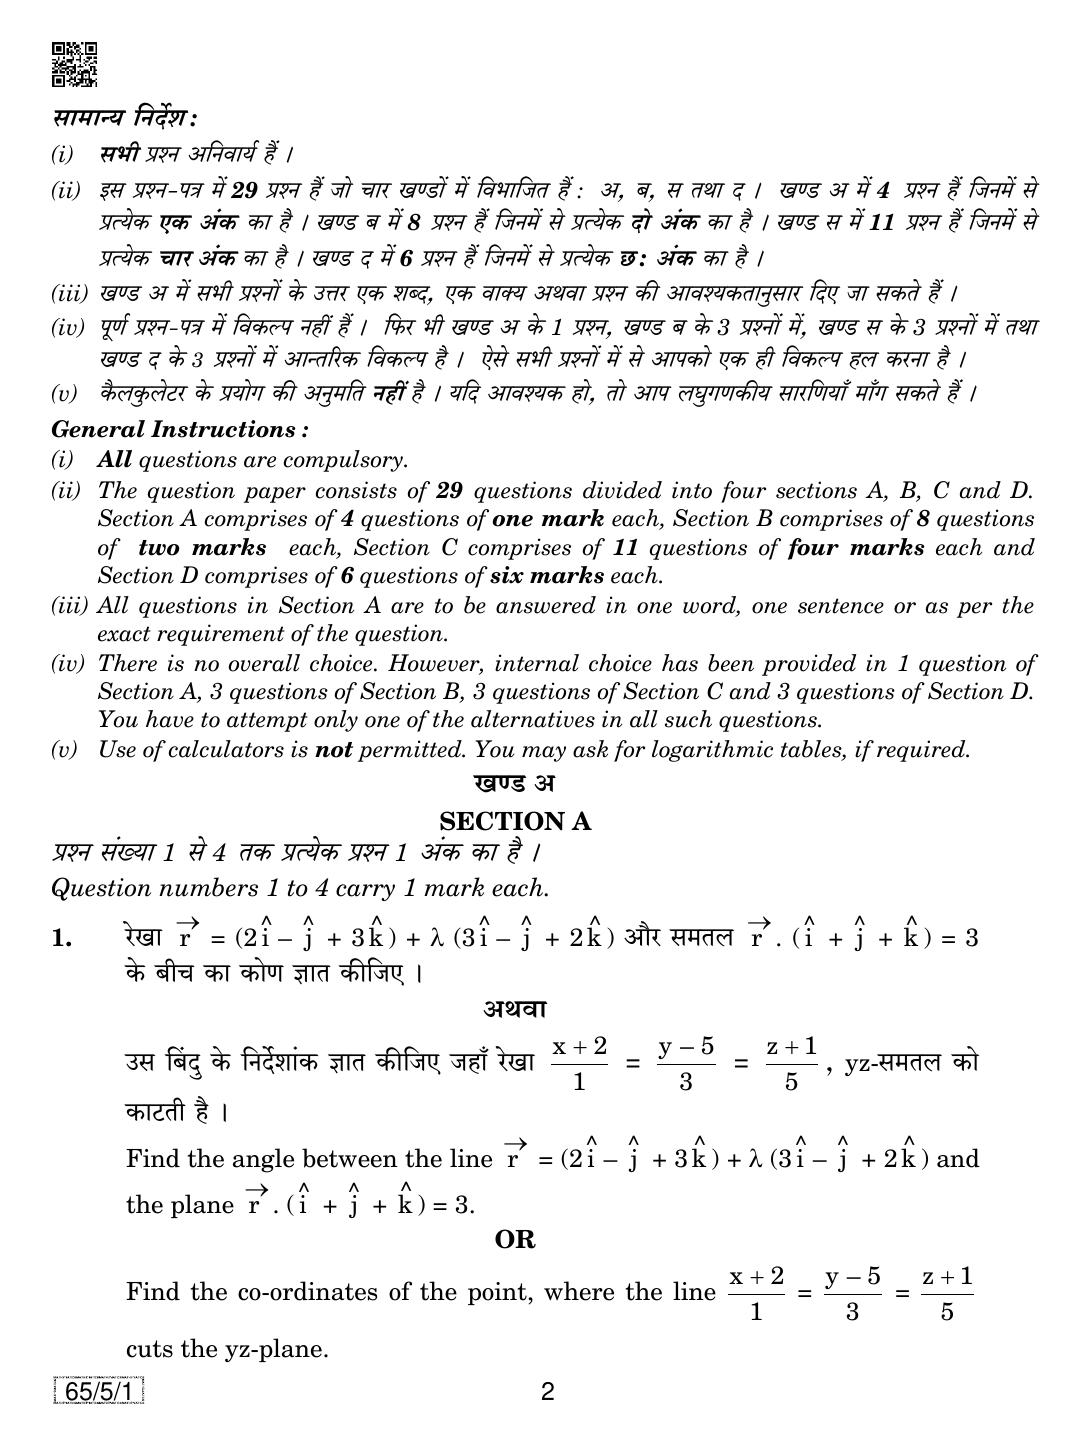 CBSE Class 12 65-5-1 Mathematics 2019 Question Paper - Page 2